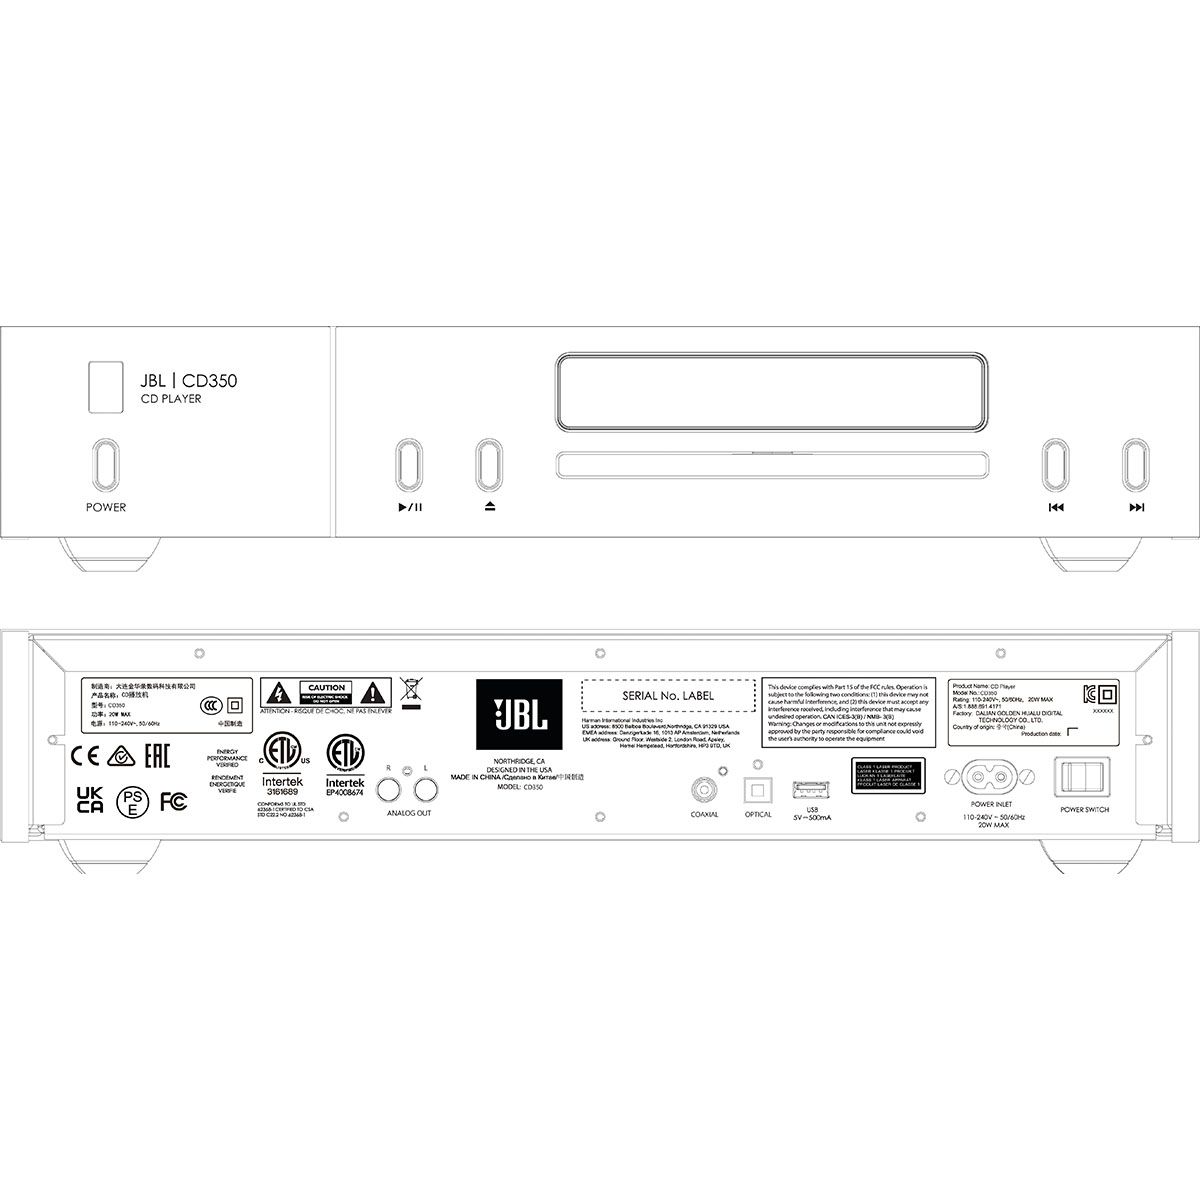 JBL CD350 CD Player - Walnut technical drawings